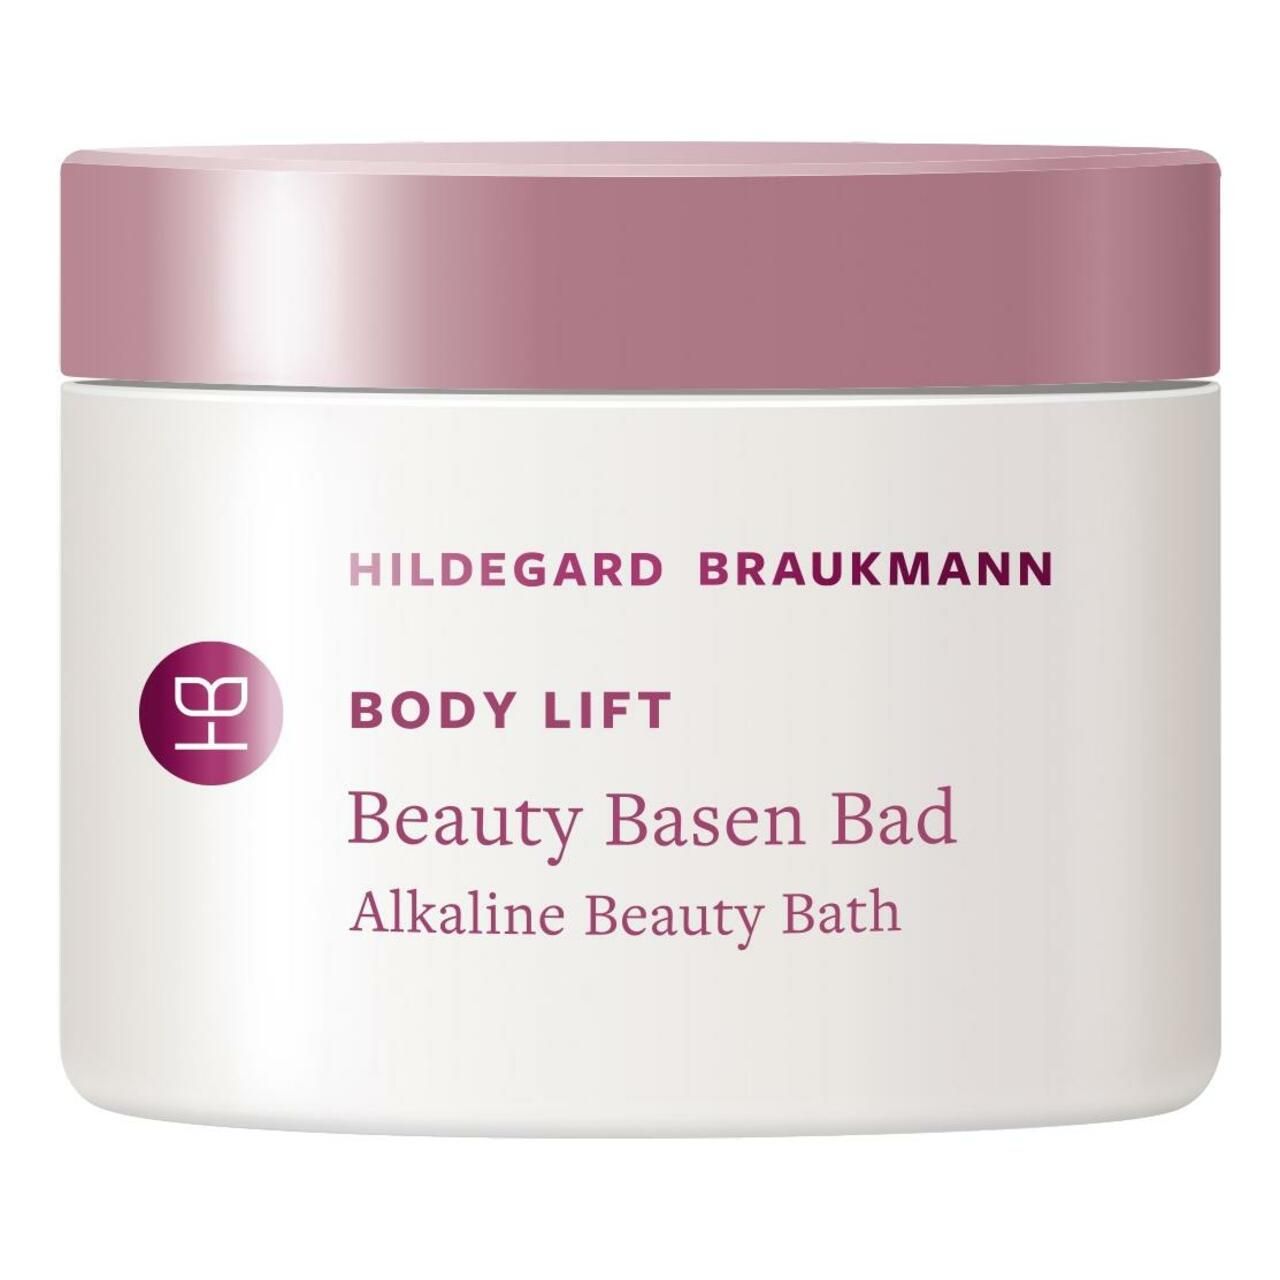 Hildegard Braukmann, Body Lift Beauty Basen Bad